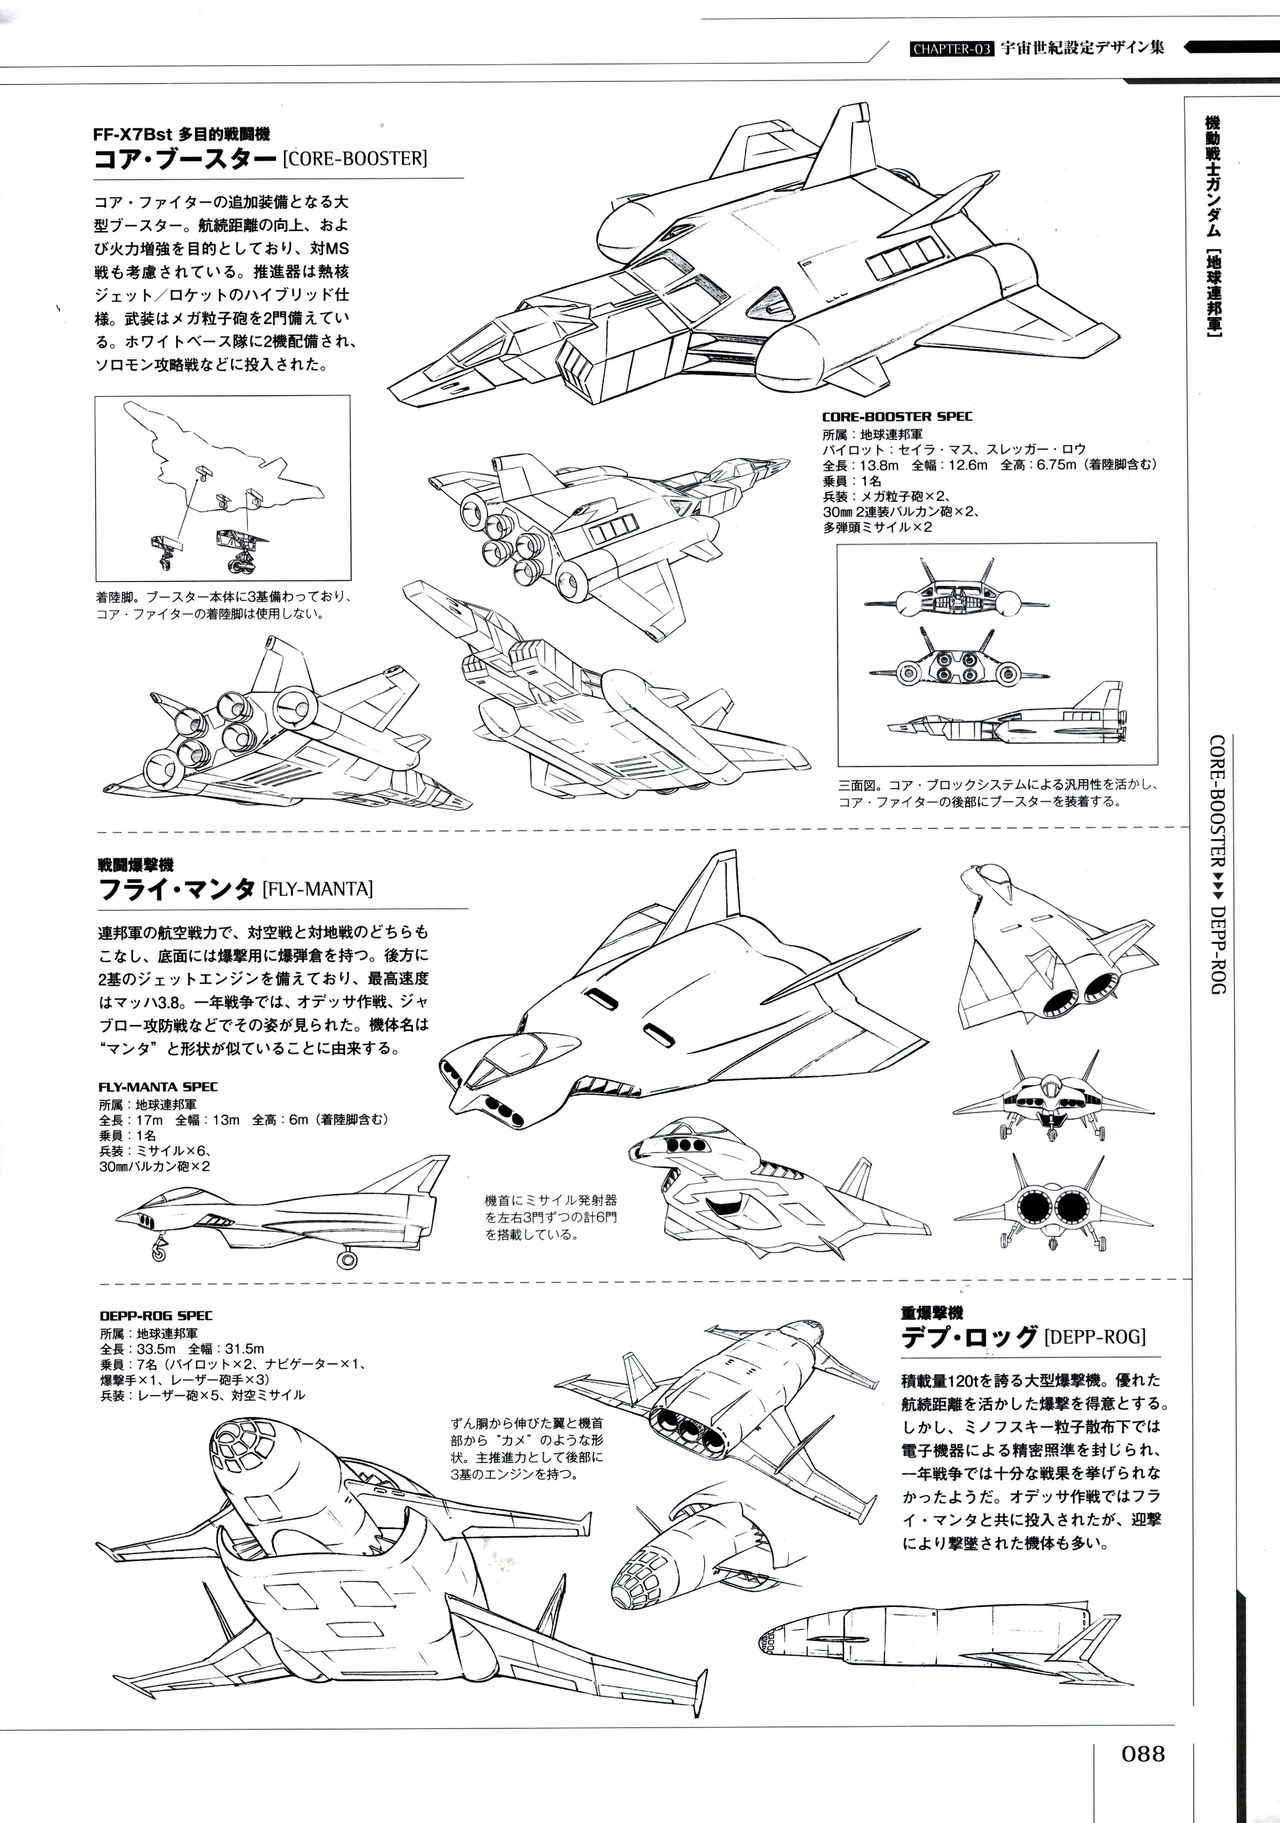 Mobile Suit Gundam - Ship & Aerospace Plane Encyclopedia - Revised Edition 93